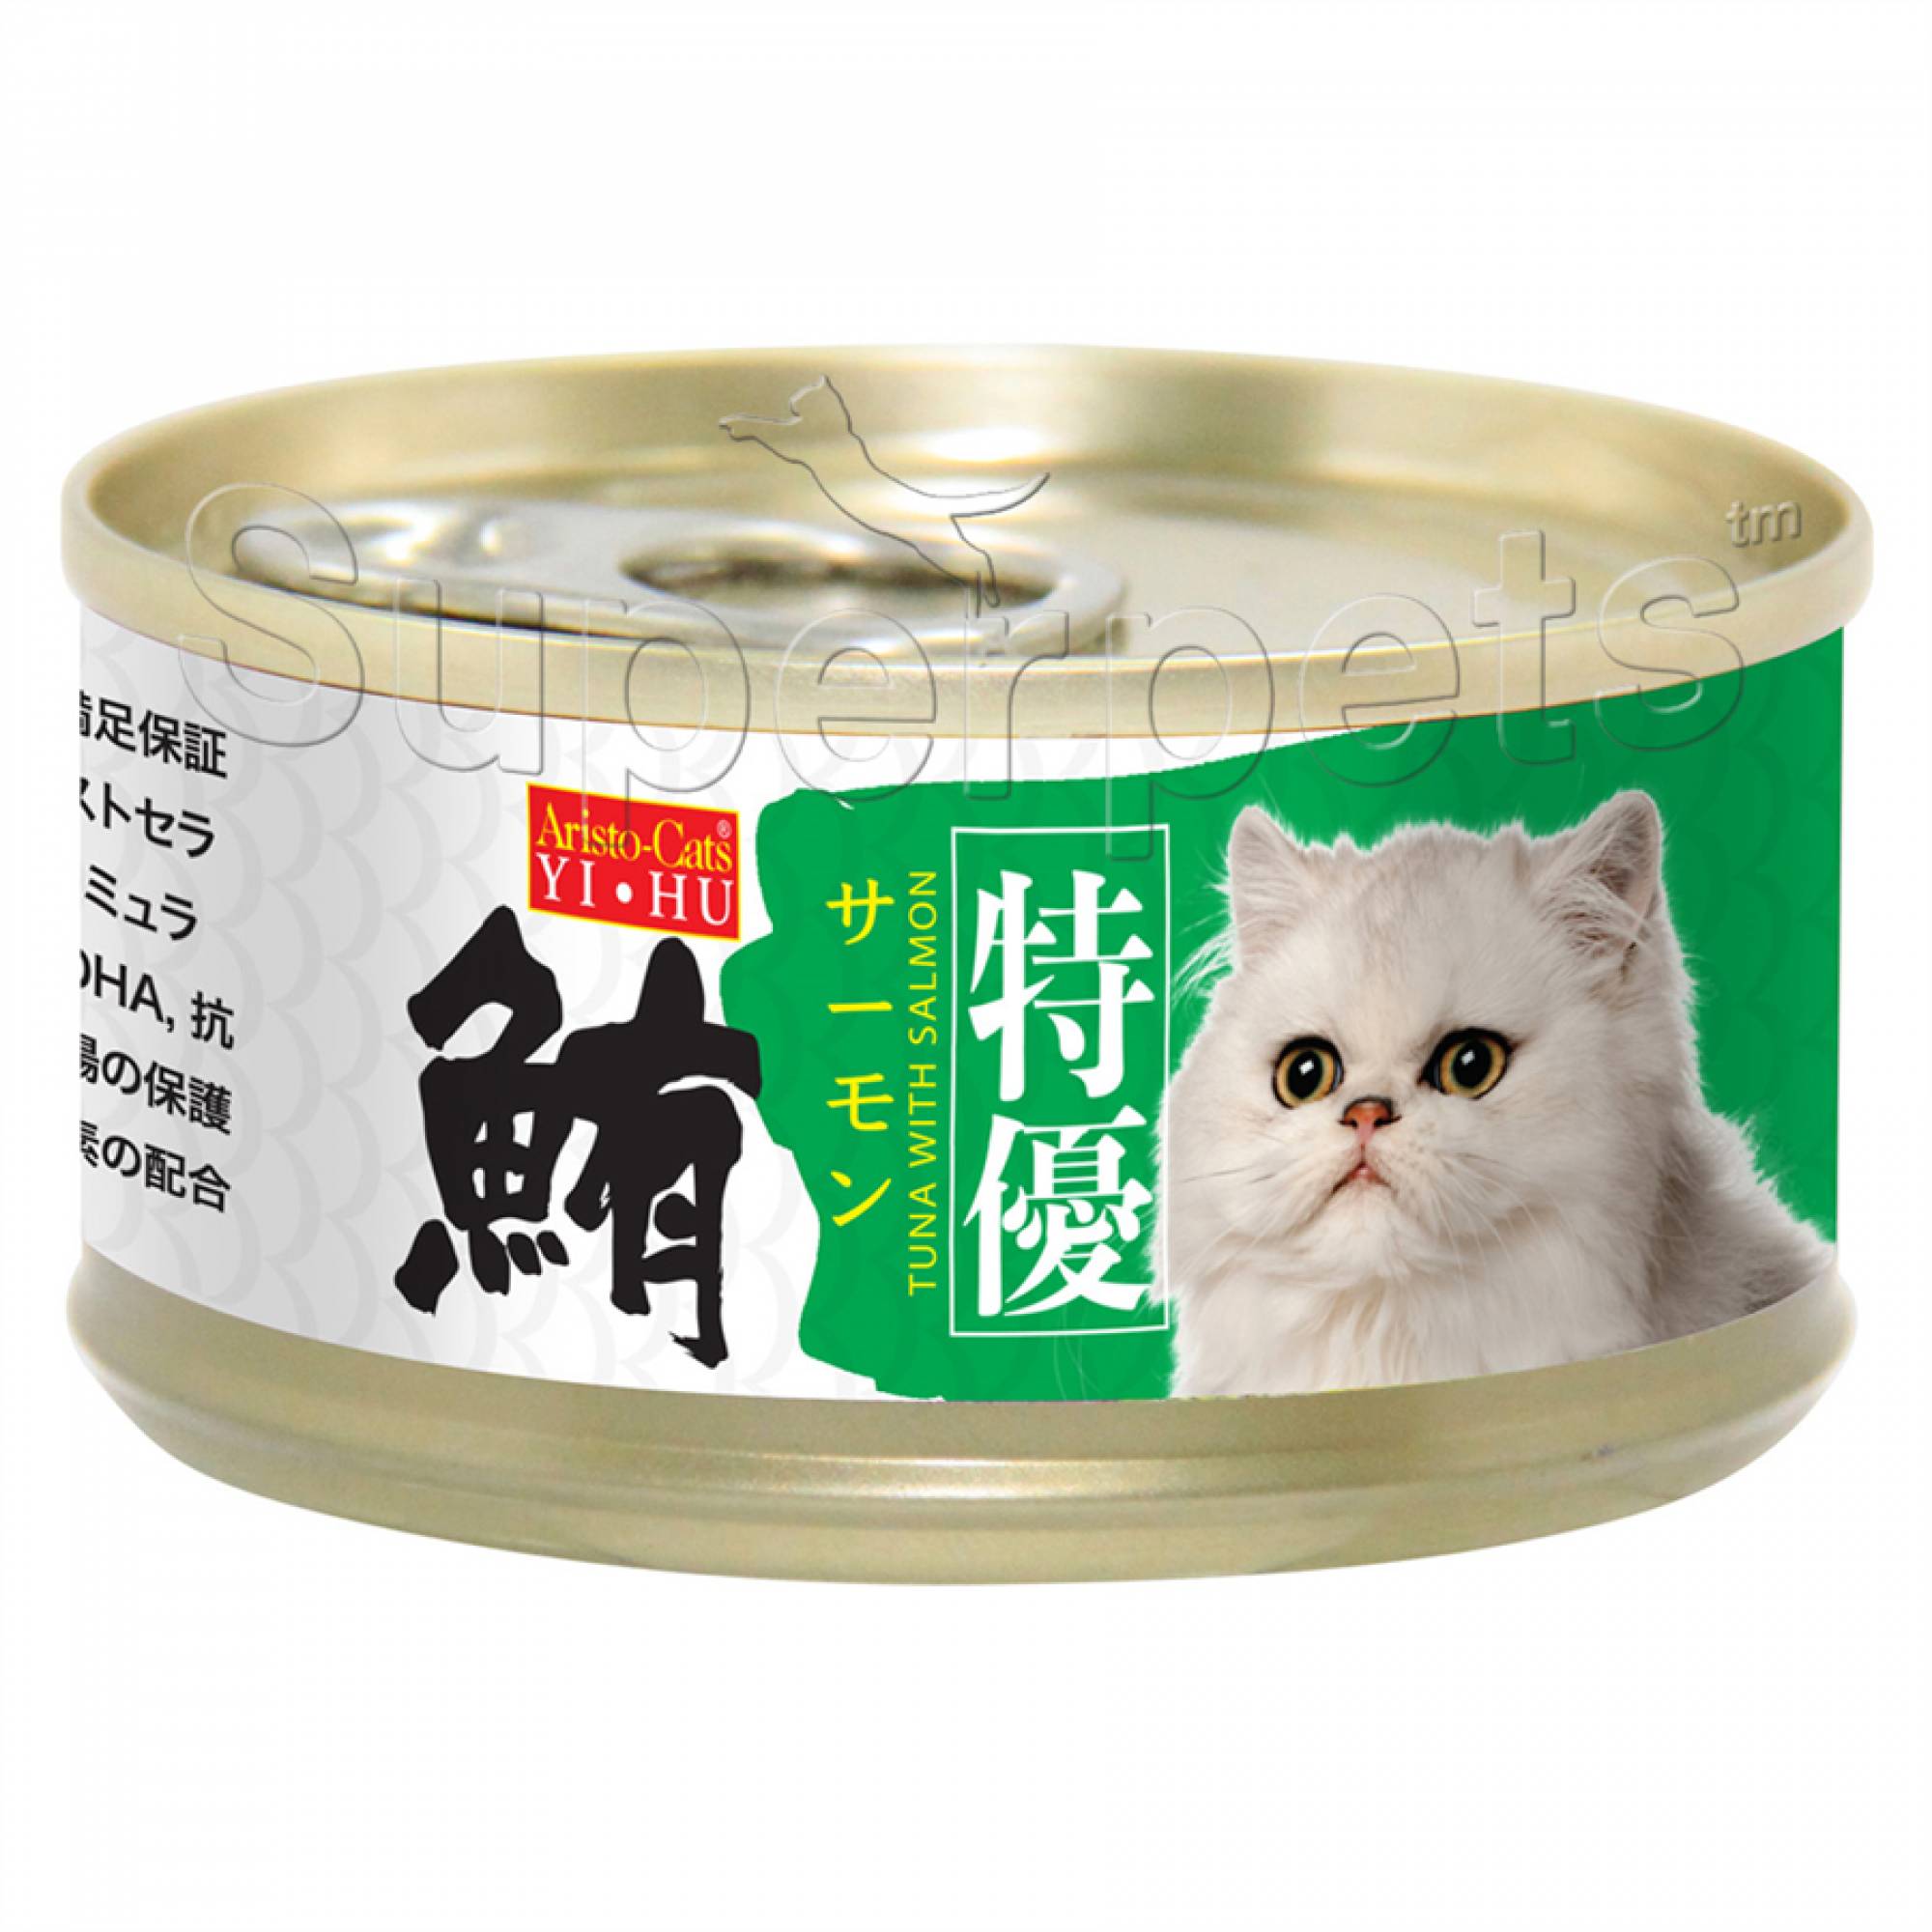 Aristo-Cats - Premium Plus (Export) - Tuna with Salmon 80g